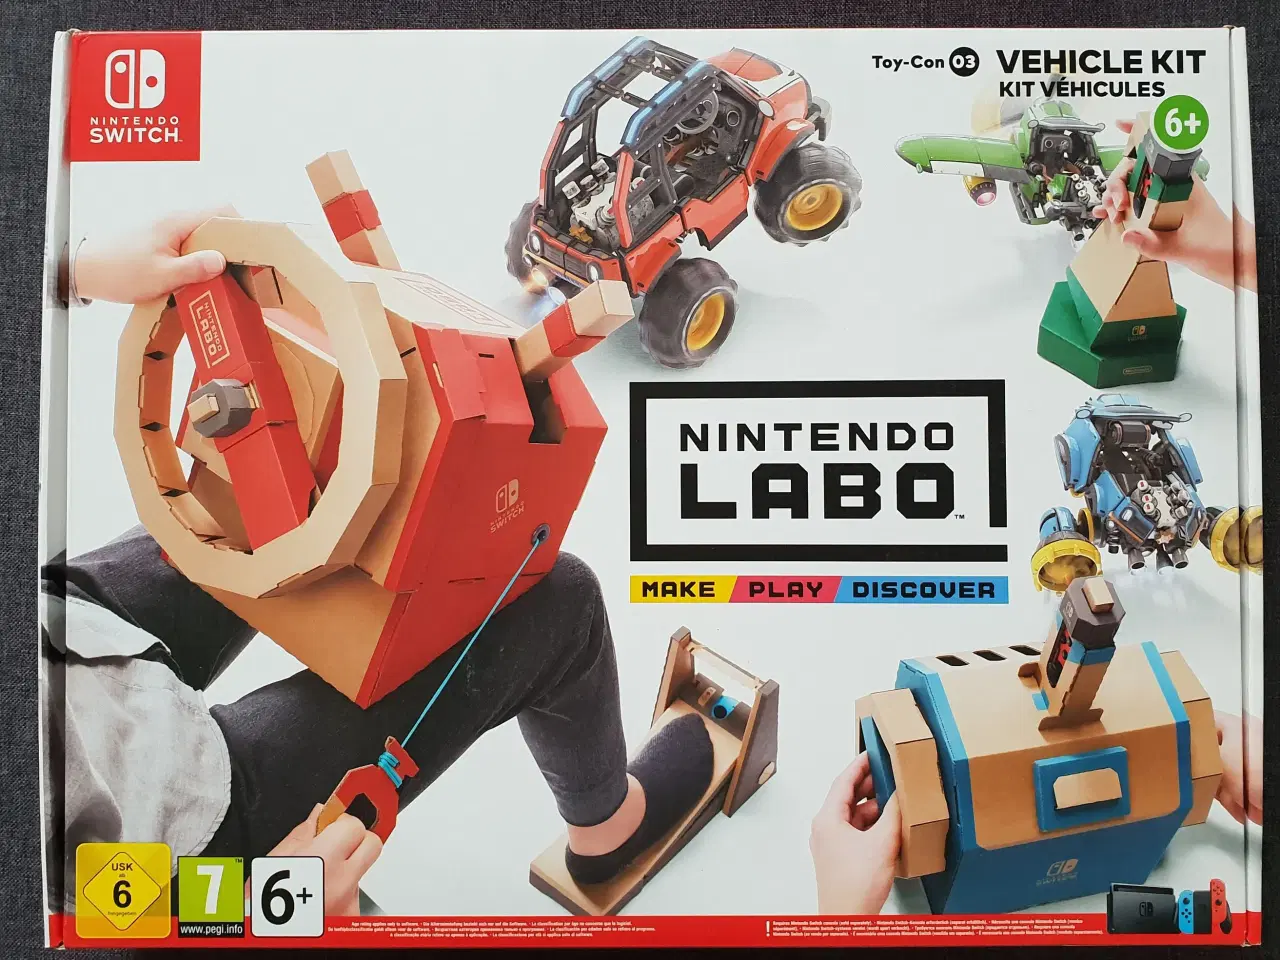 Billede 1 - Nintendo Labo Vehicle Kit (Toy-Con 03)